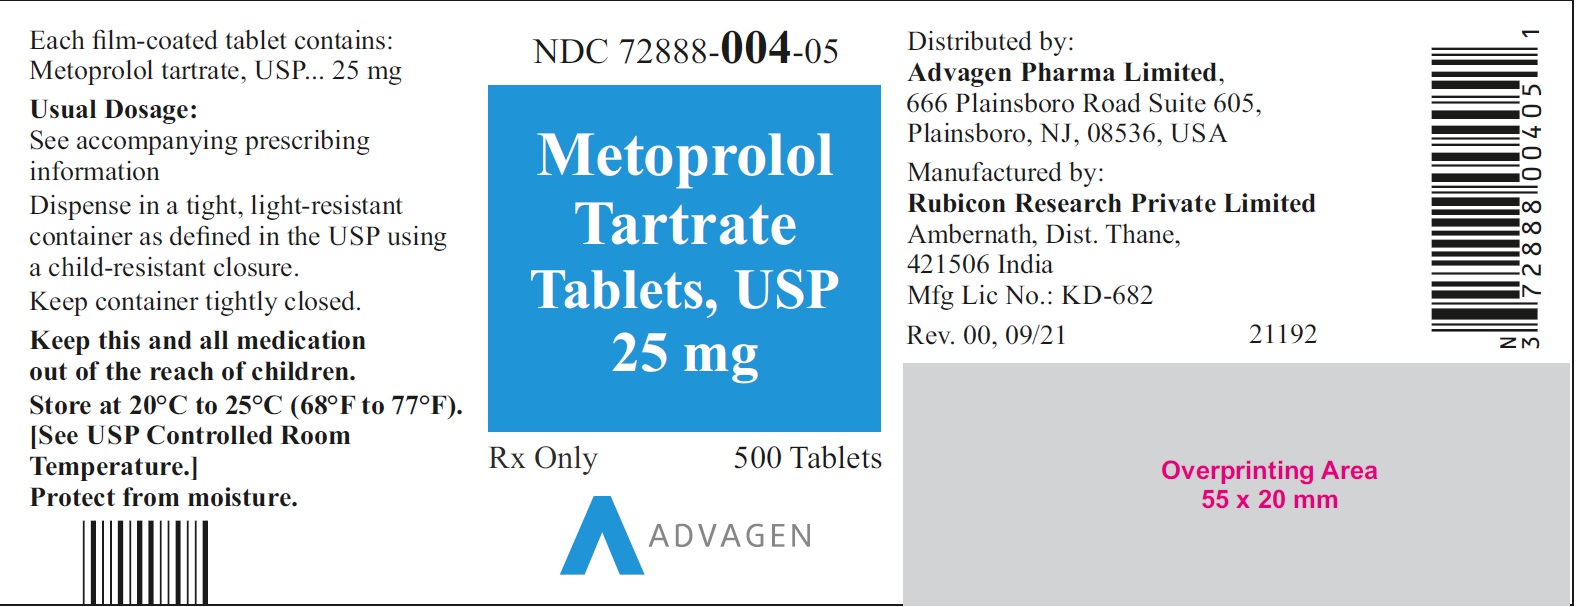 NDC: <a href=/NDC/72888-004-05>72888-004-05</a> - Metoprolol Tartrate Tablets, USP 25 mg - 500 Tablets